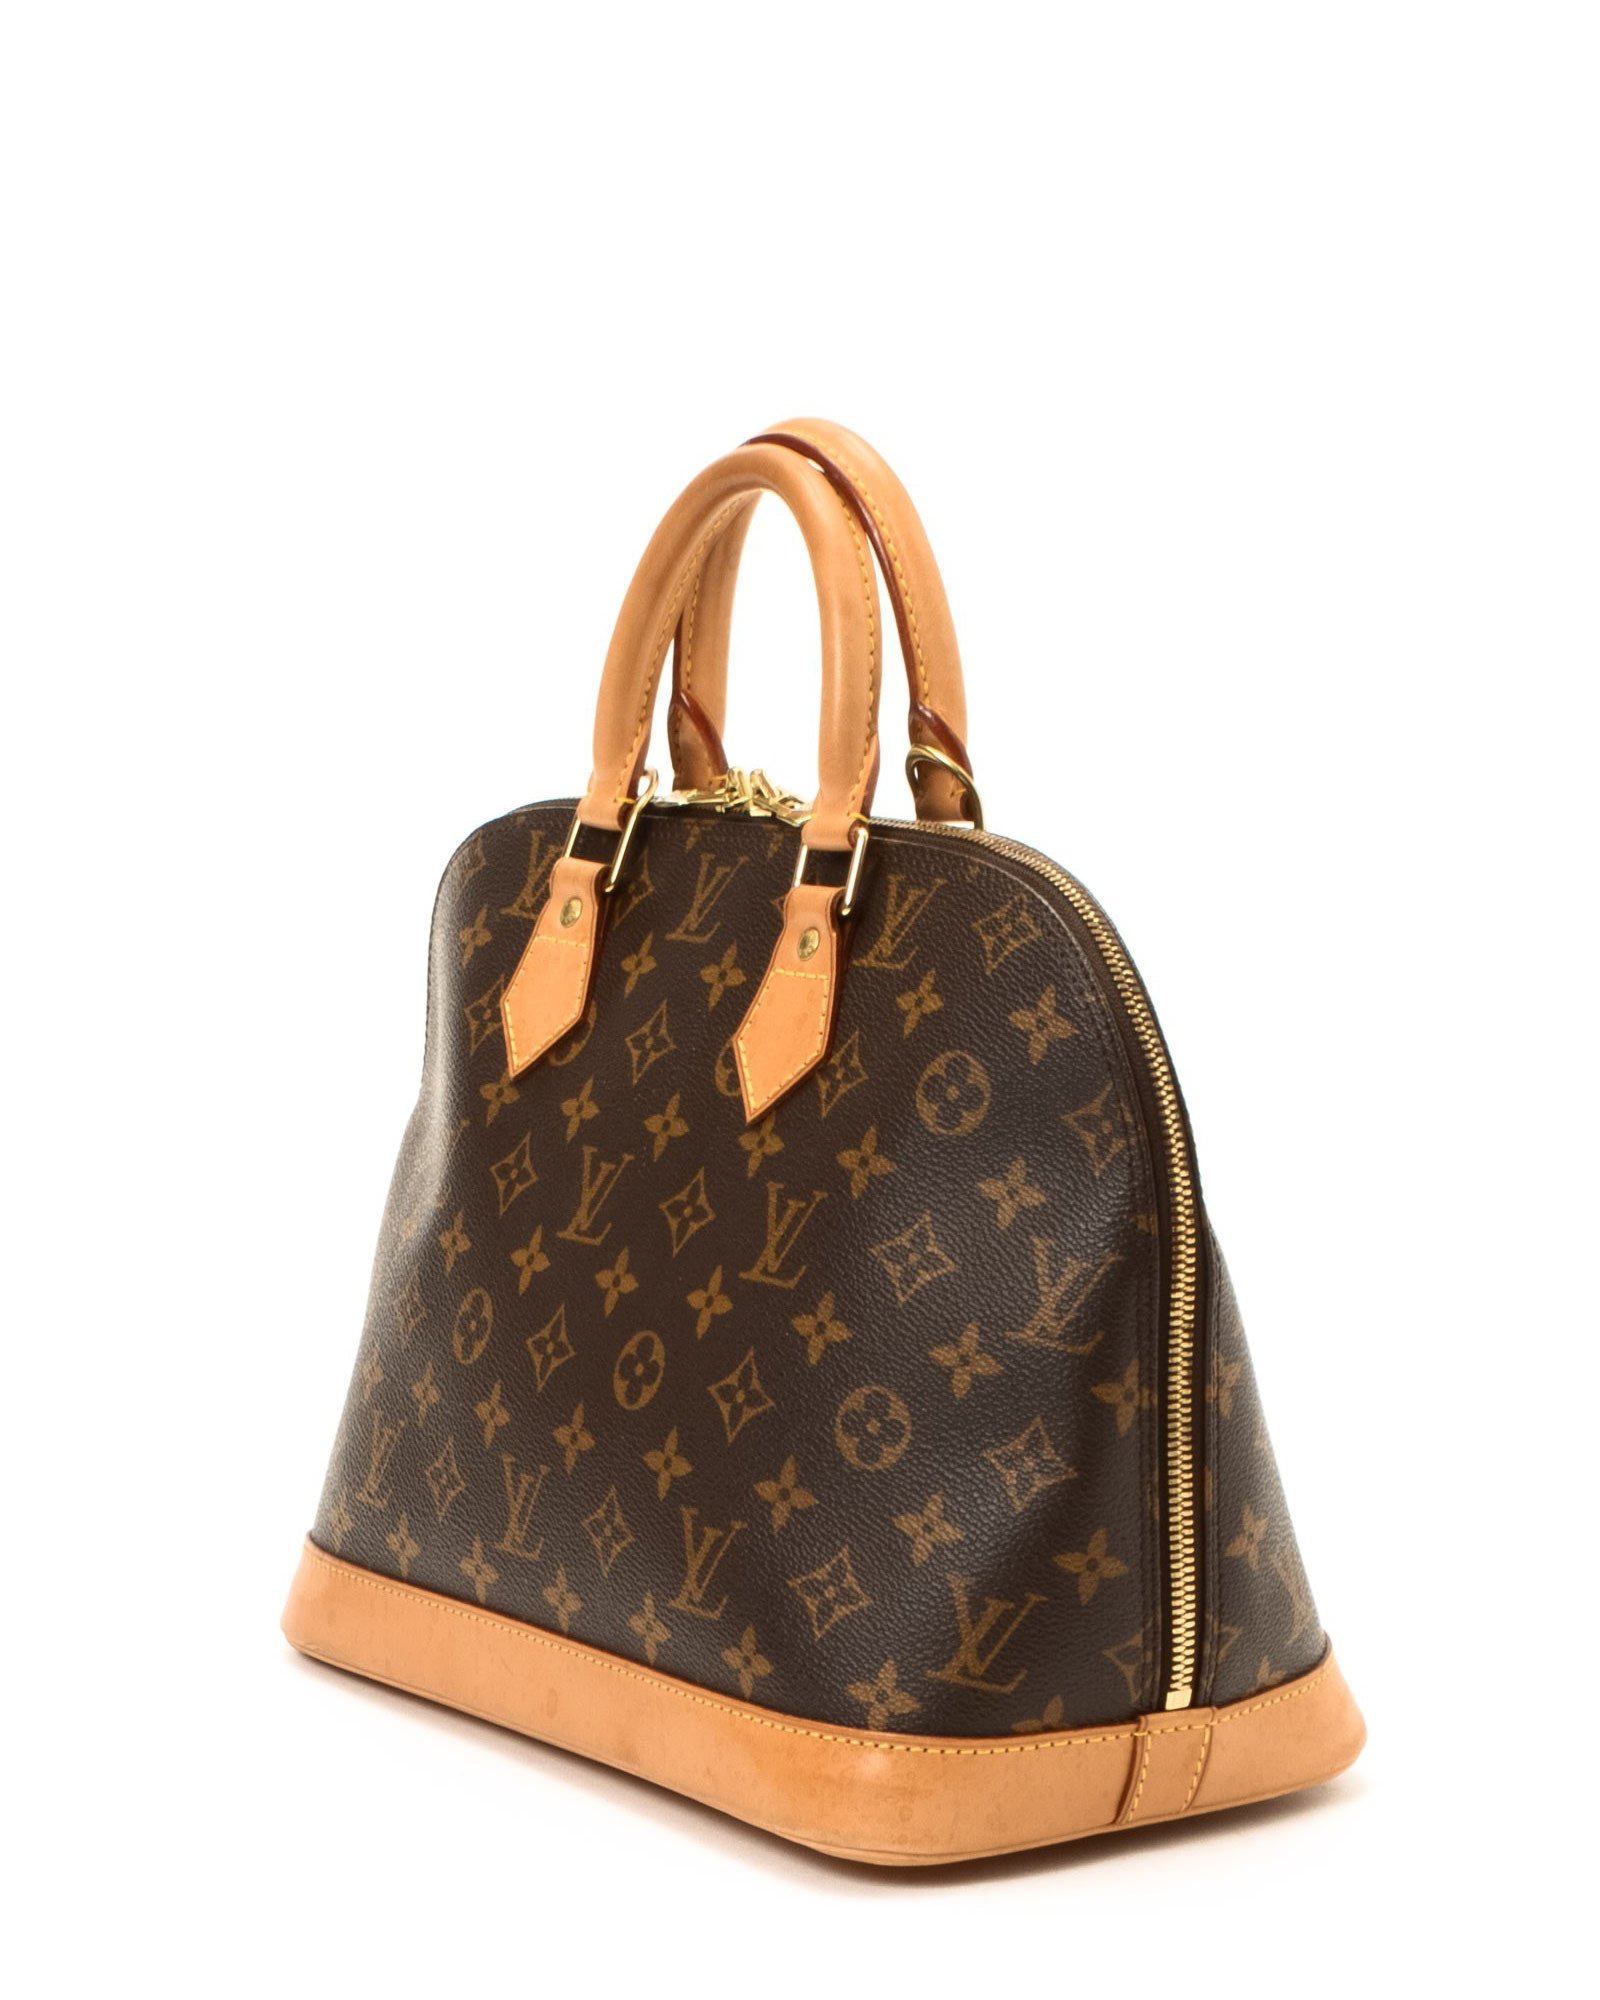 Lyst - Louis Vuitton Handbag - Vintage in Brown